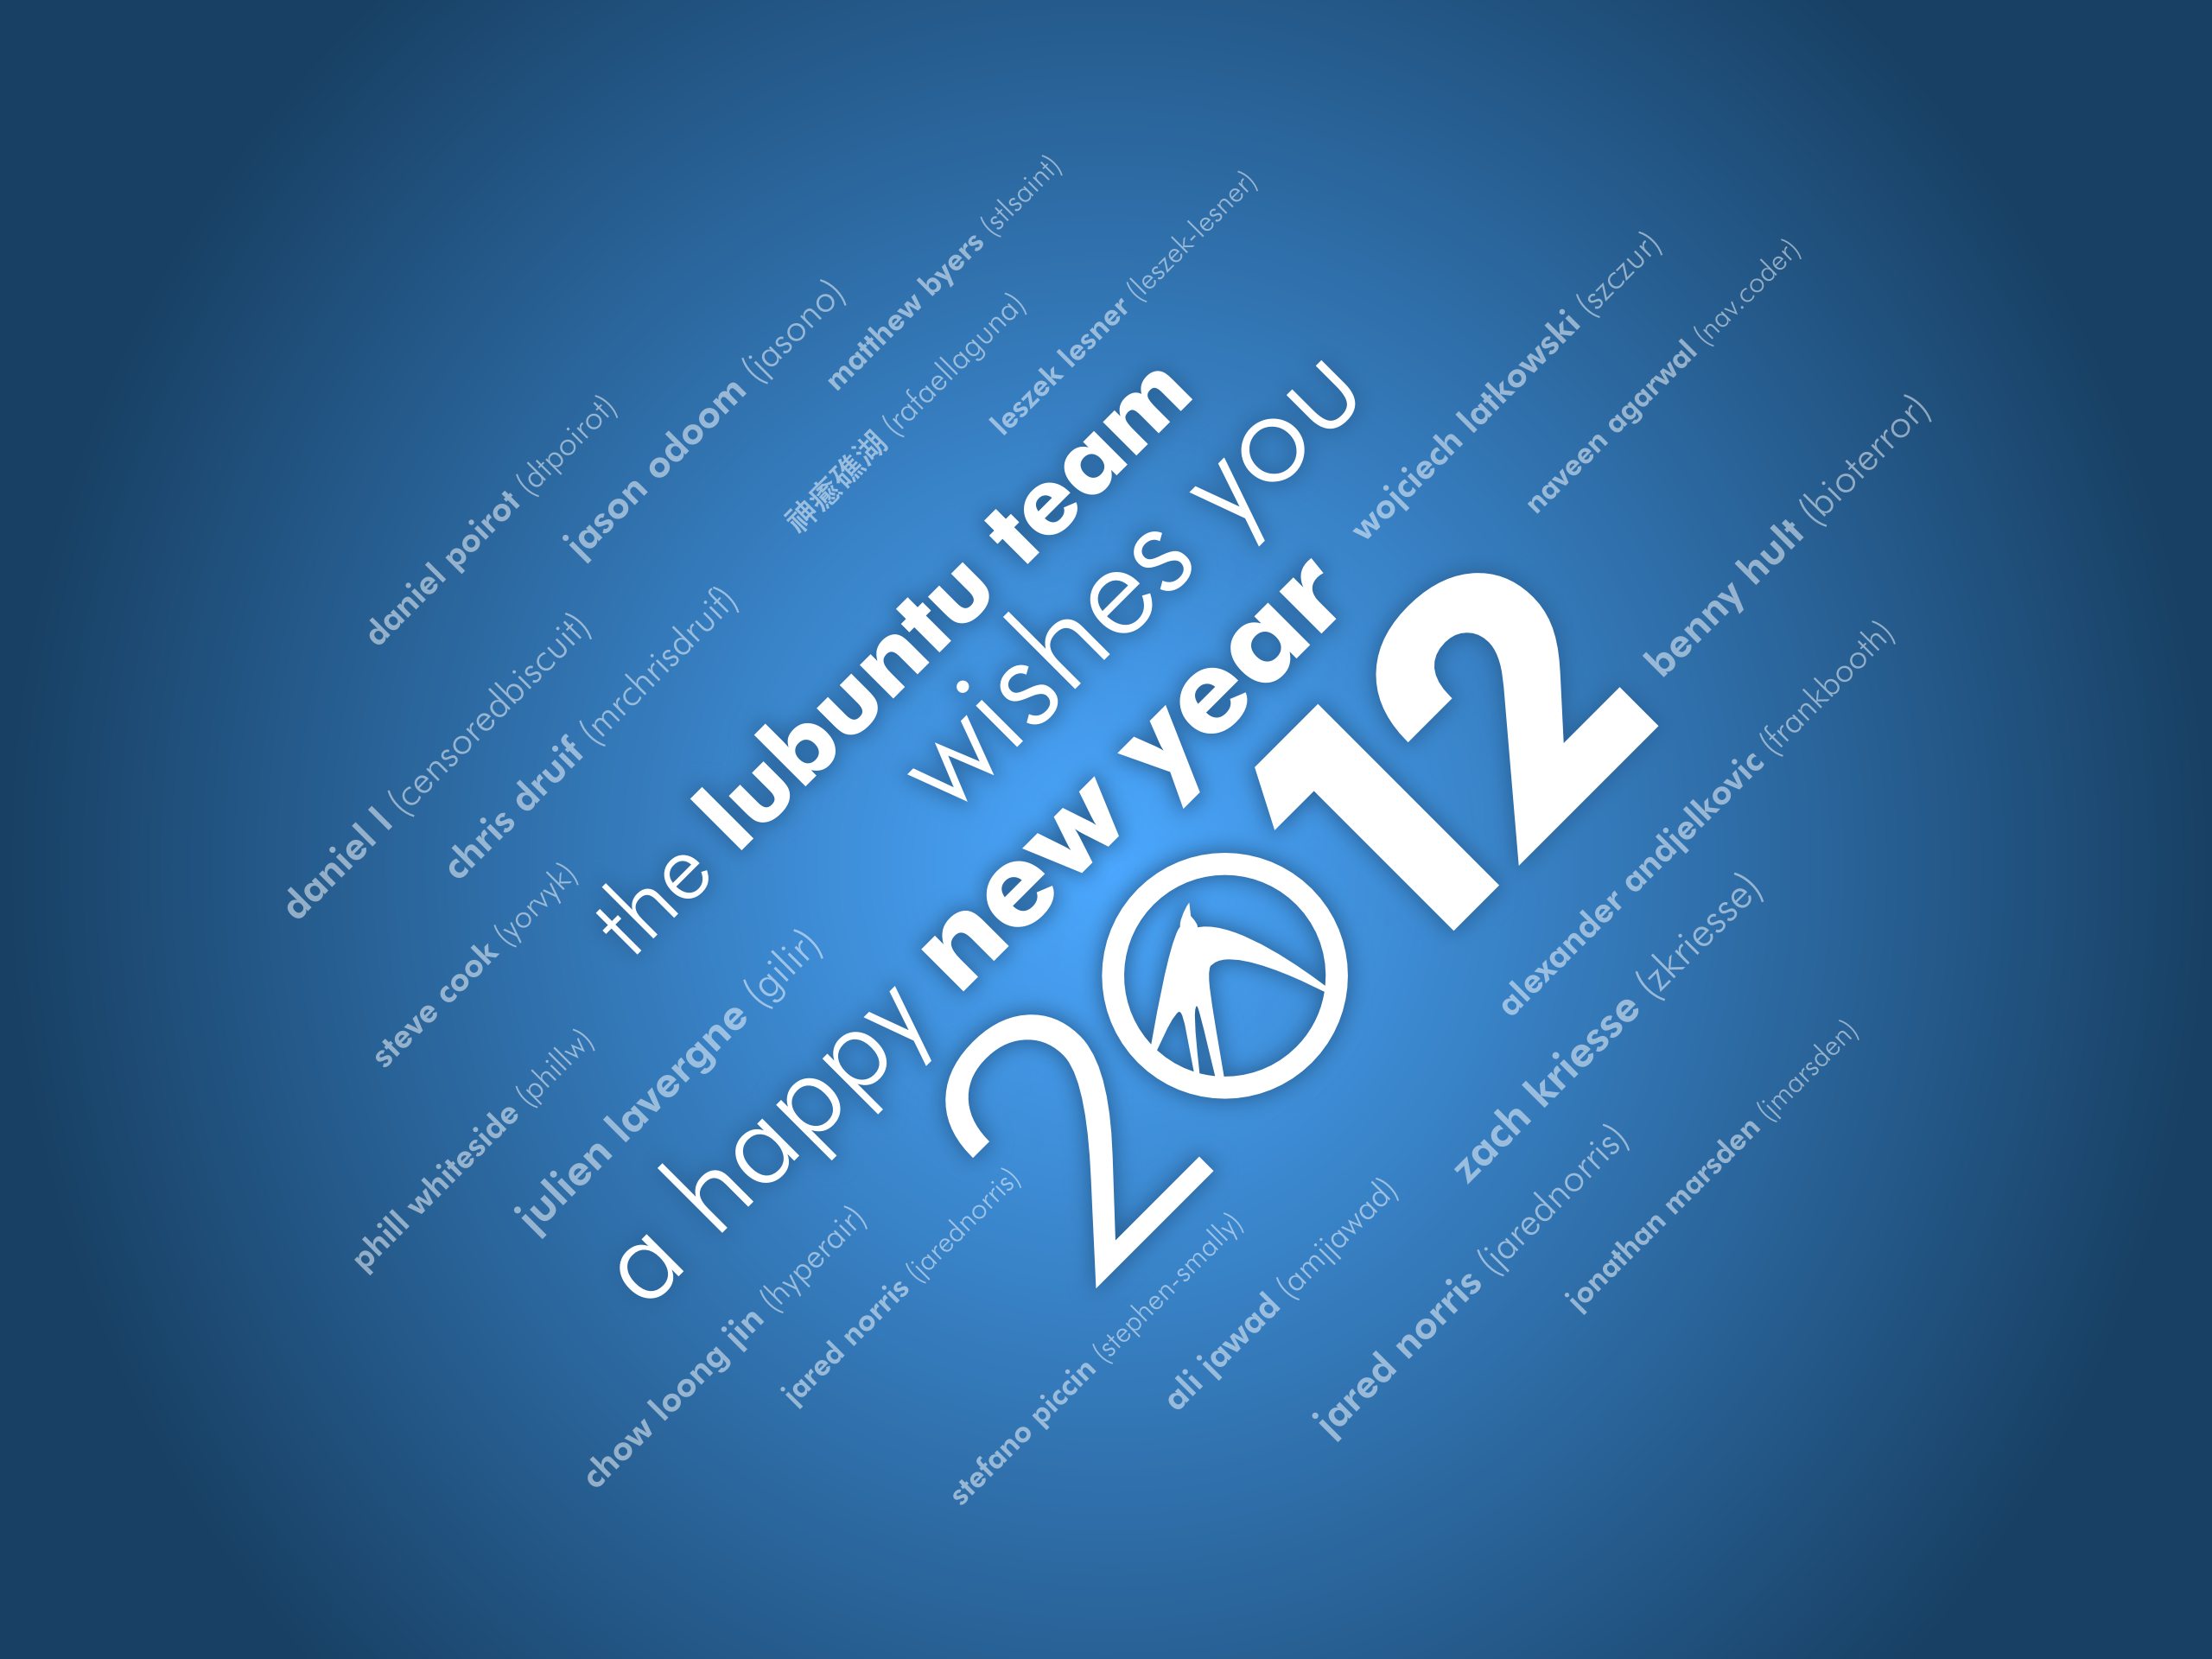 Lubuntu Wish Users Happy New Year With Default Wallpaper Omg